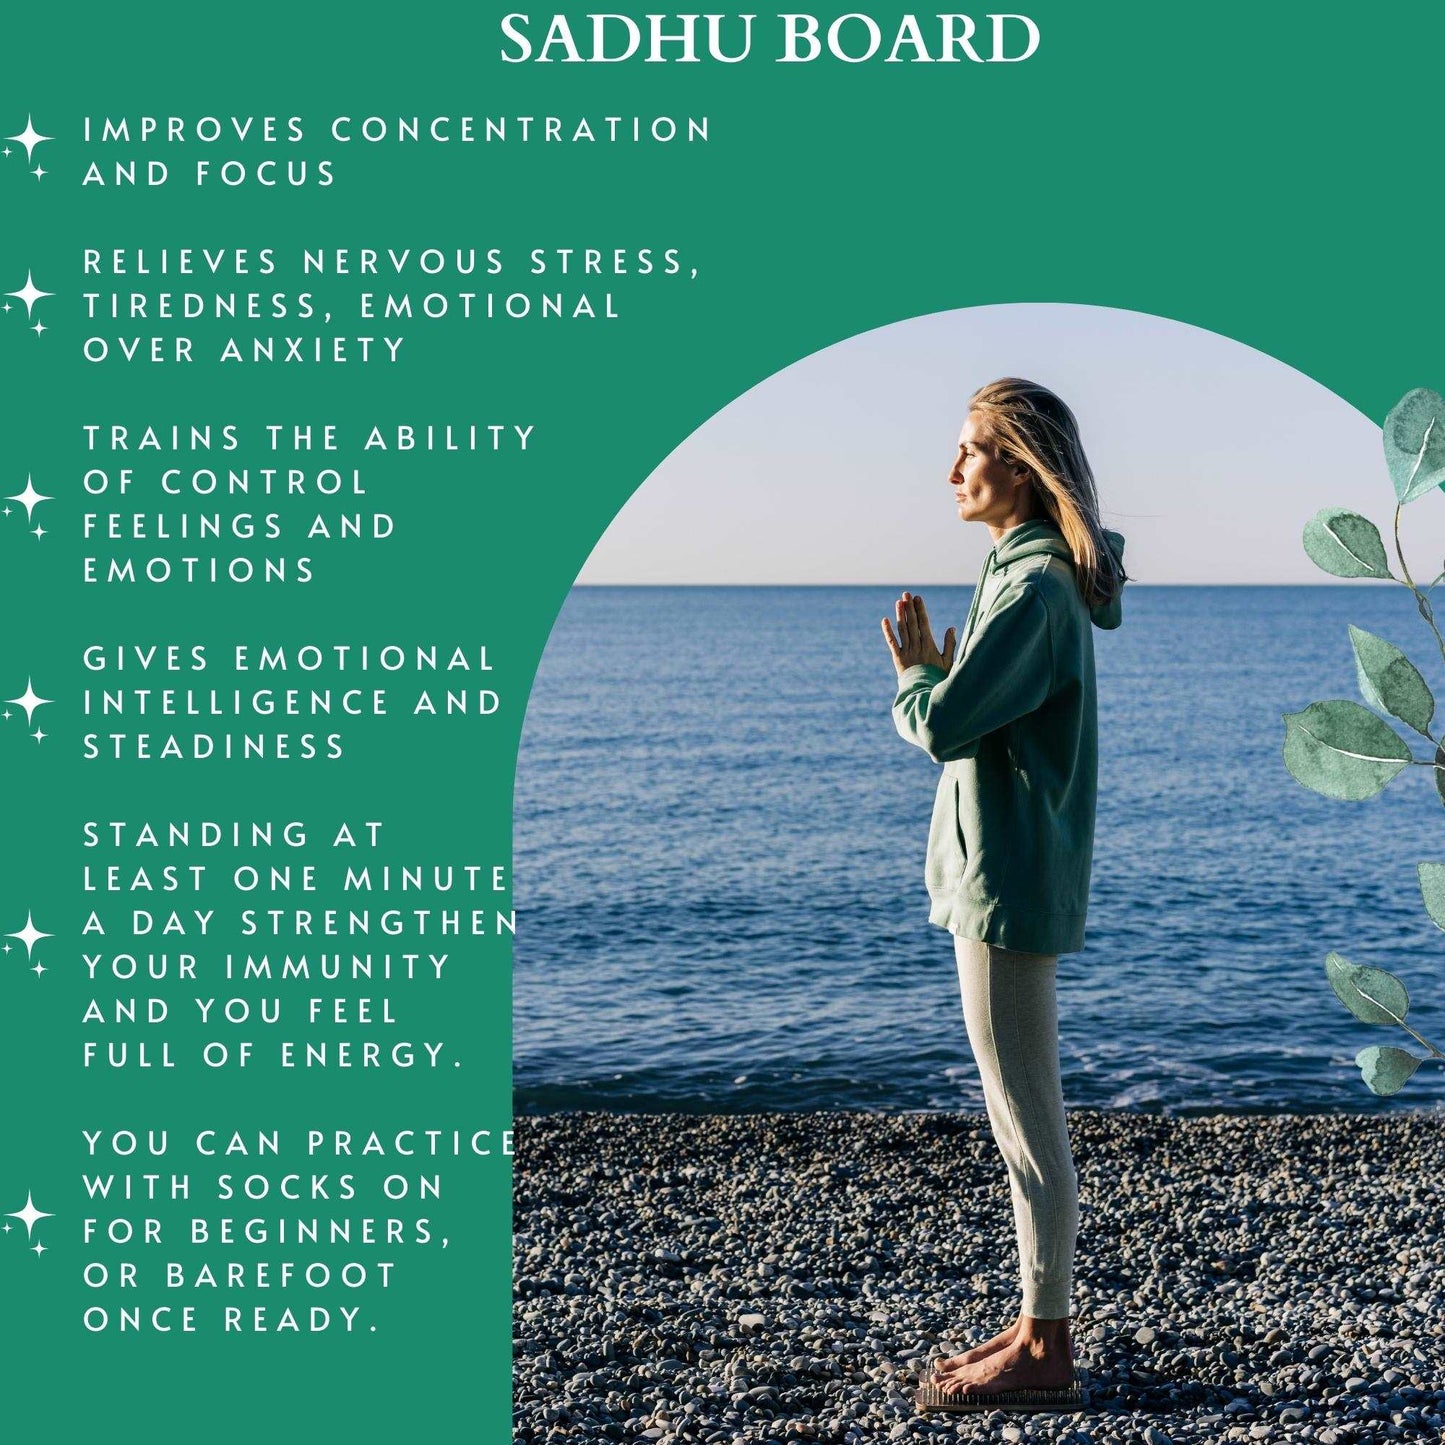 Compact Sadhu board - Tree of Life, Yoga board, Nails board 0.4 in (10 mm)